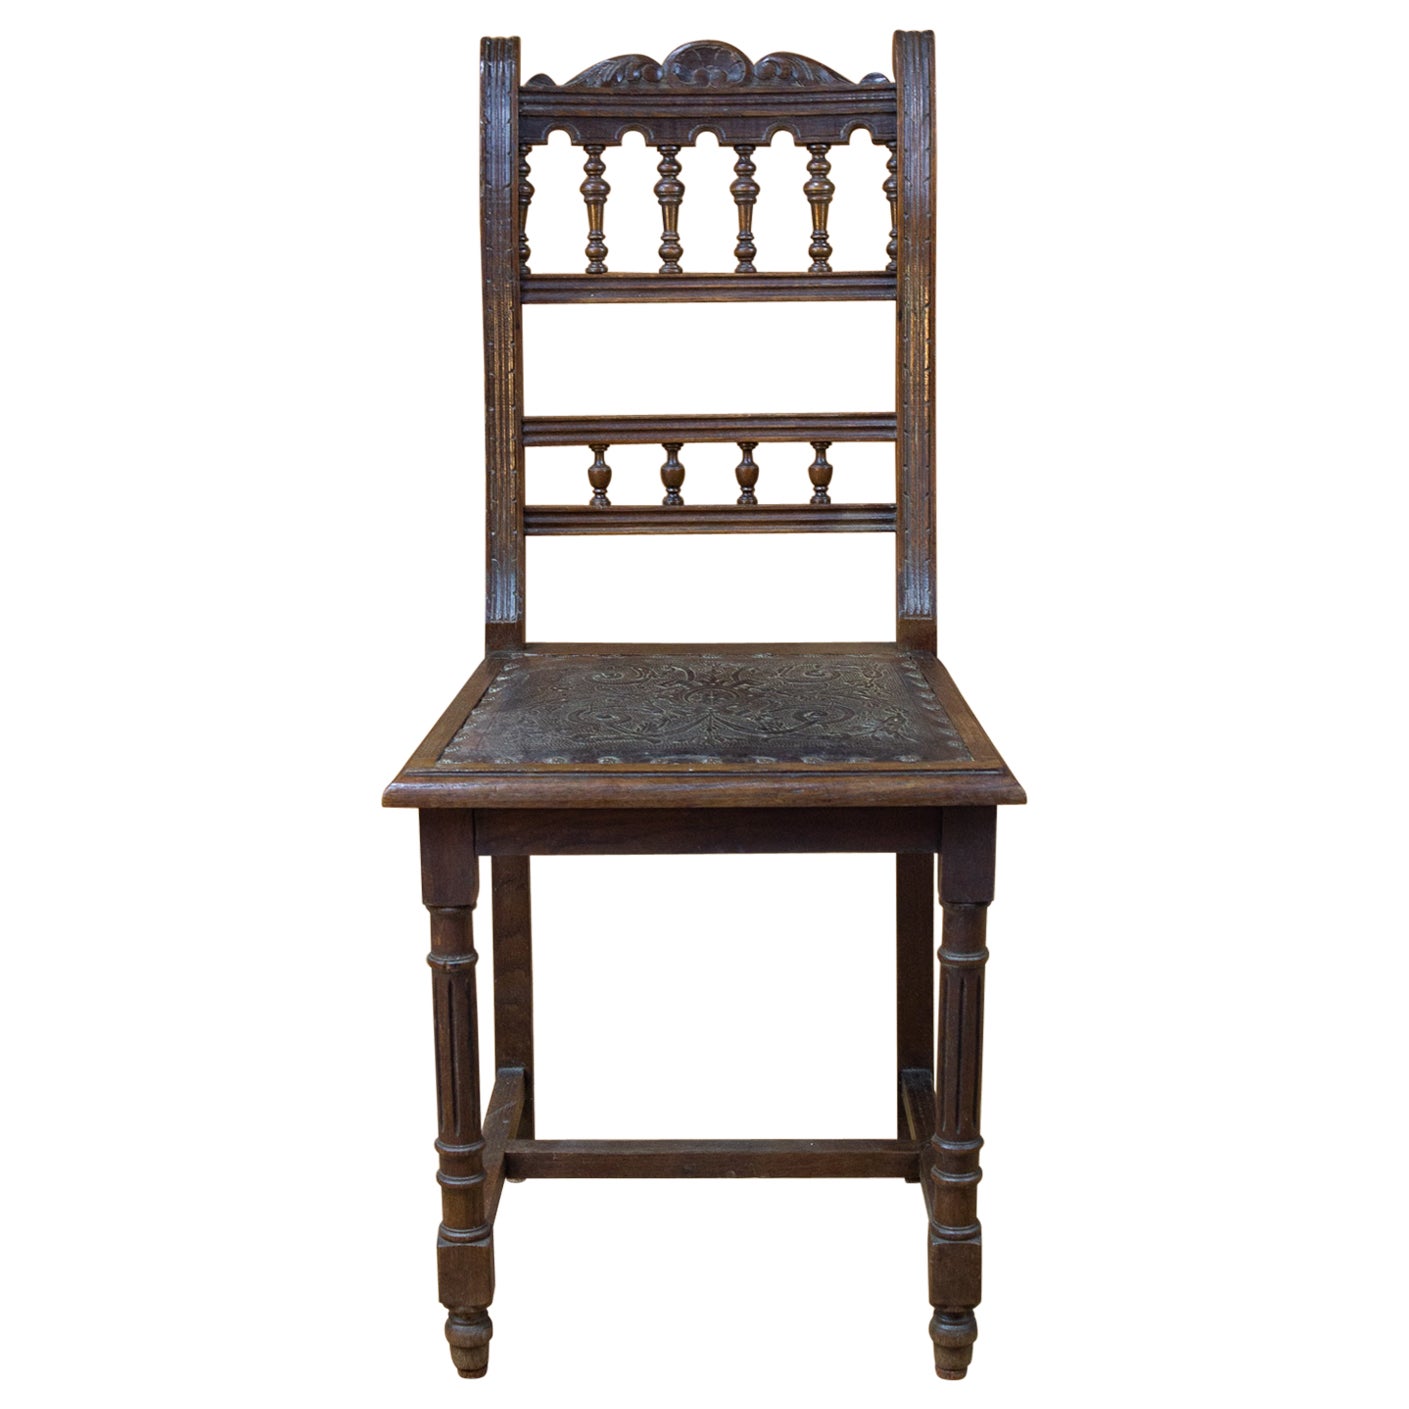 Renaissance Revival Chair Henri II Style 19th Century